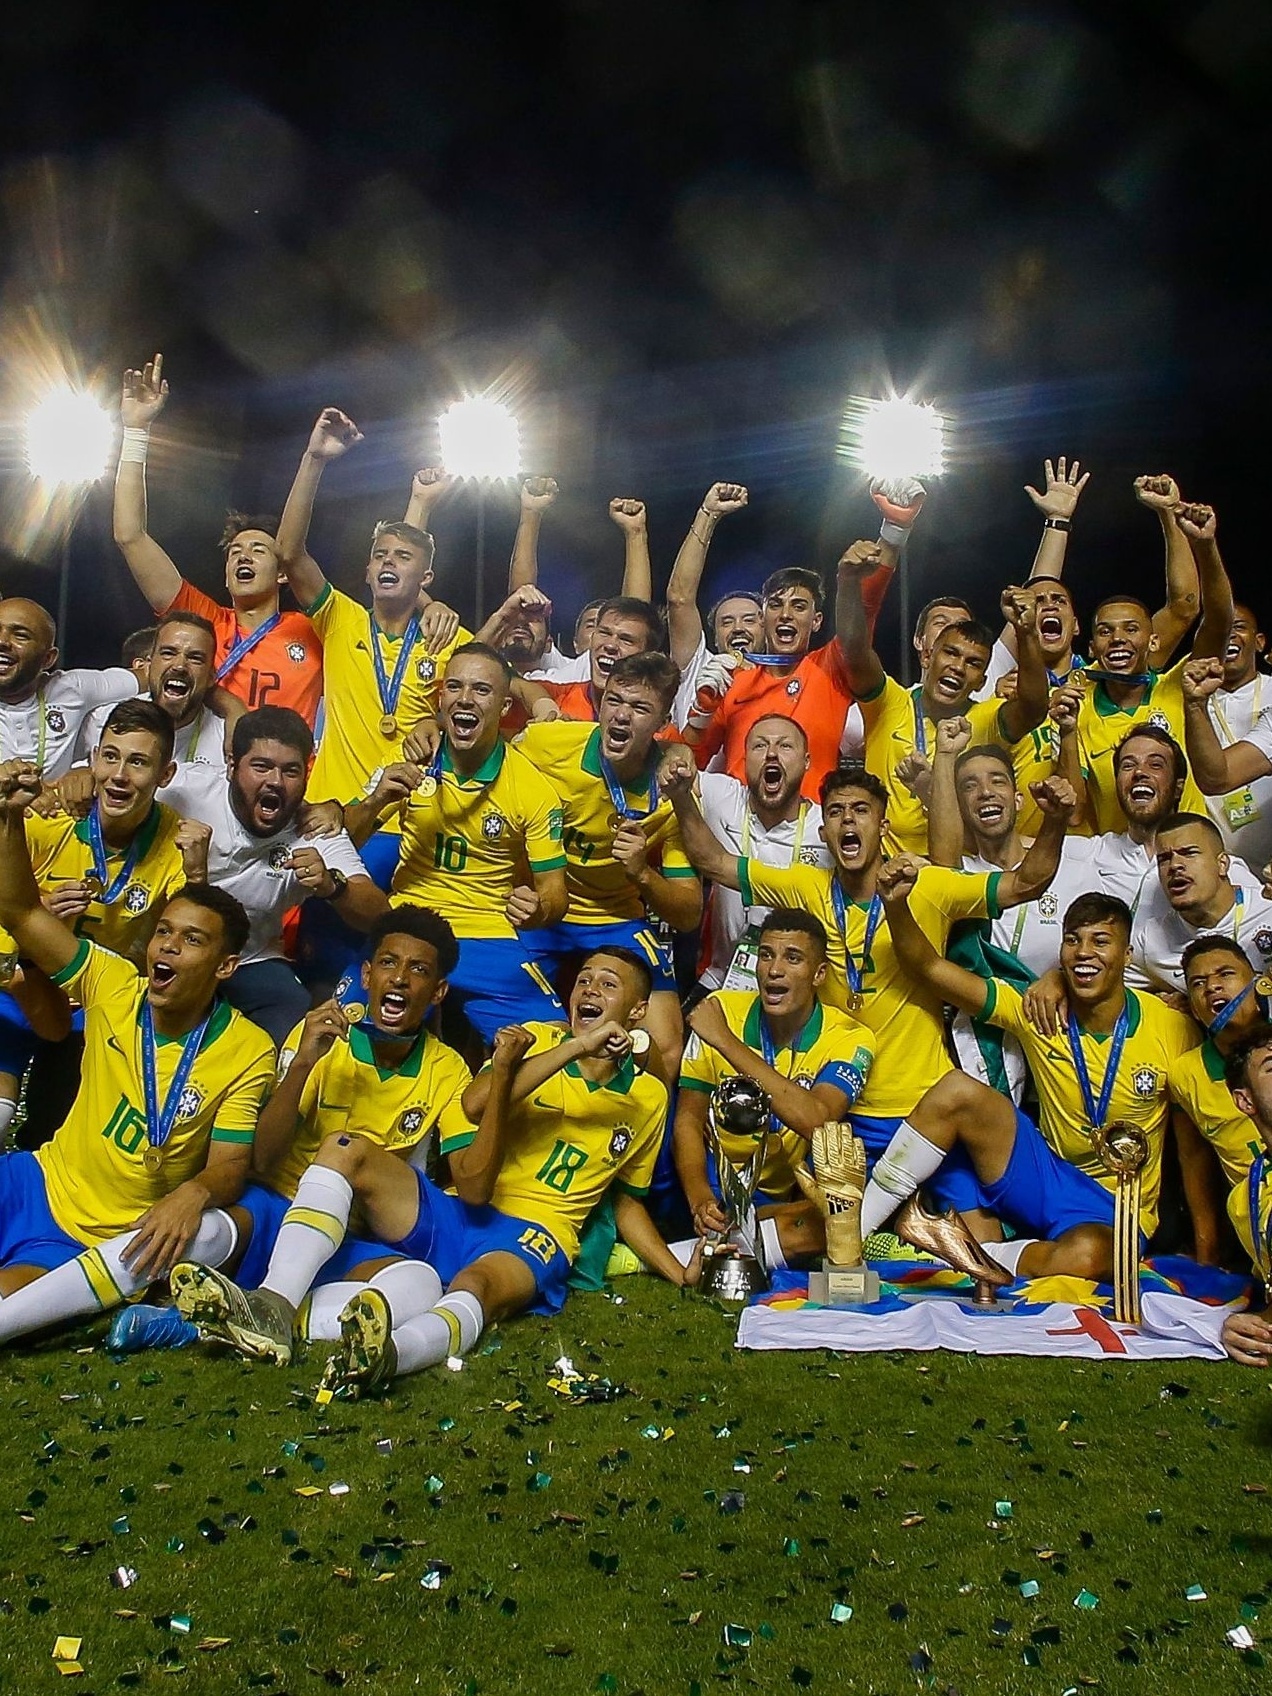 Brasil sufocado! - UOL Esporte